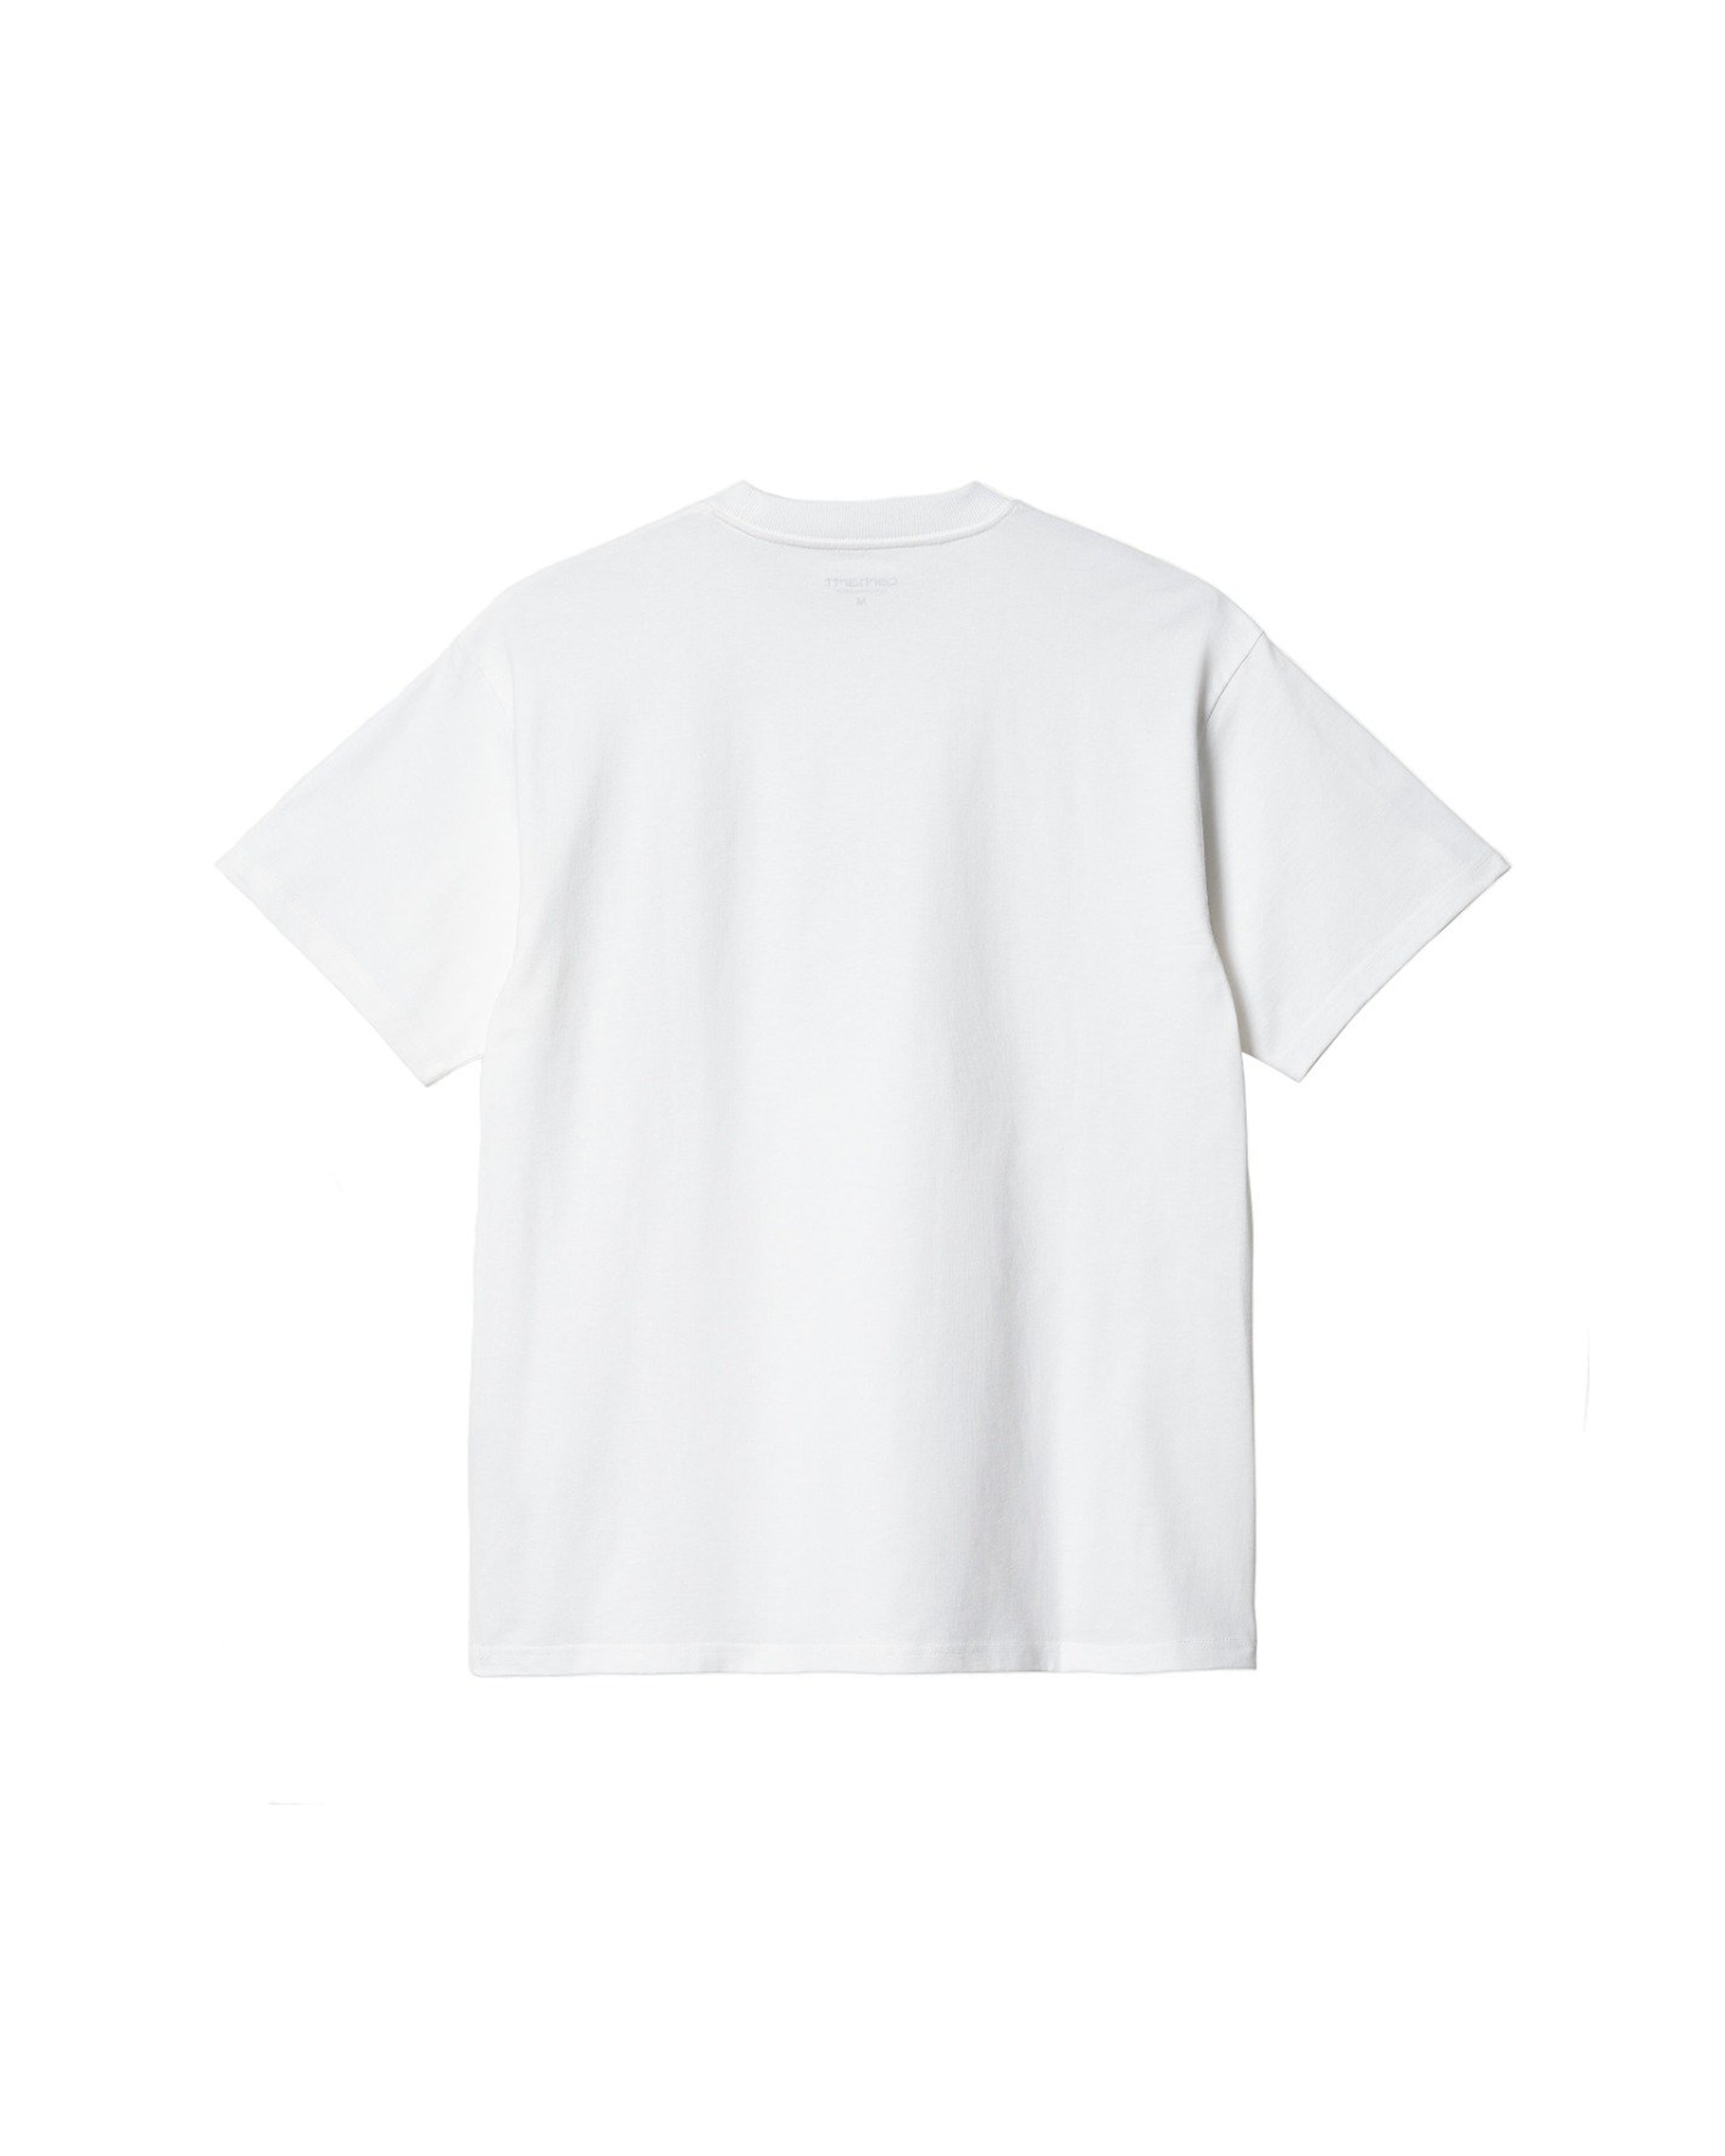 S/S Warm Embrace T-Shirt - White